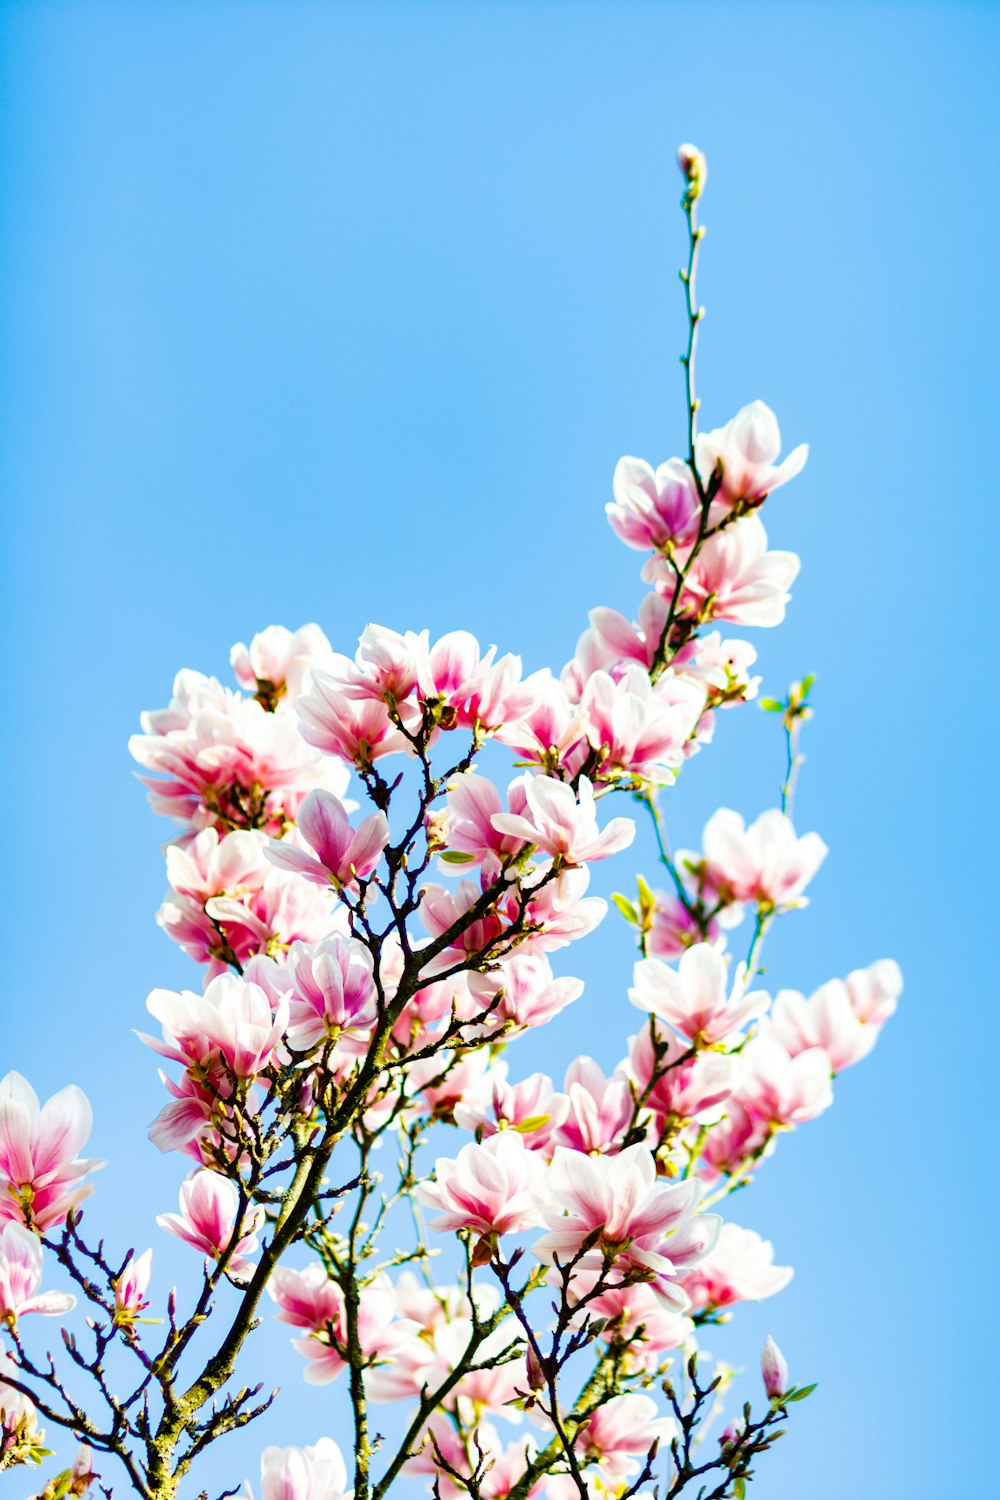 100+ Pink Flower Images | Download Free Pictures On Unsplash